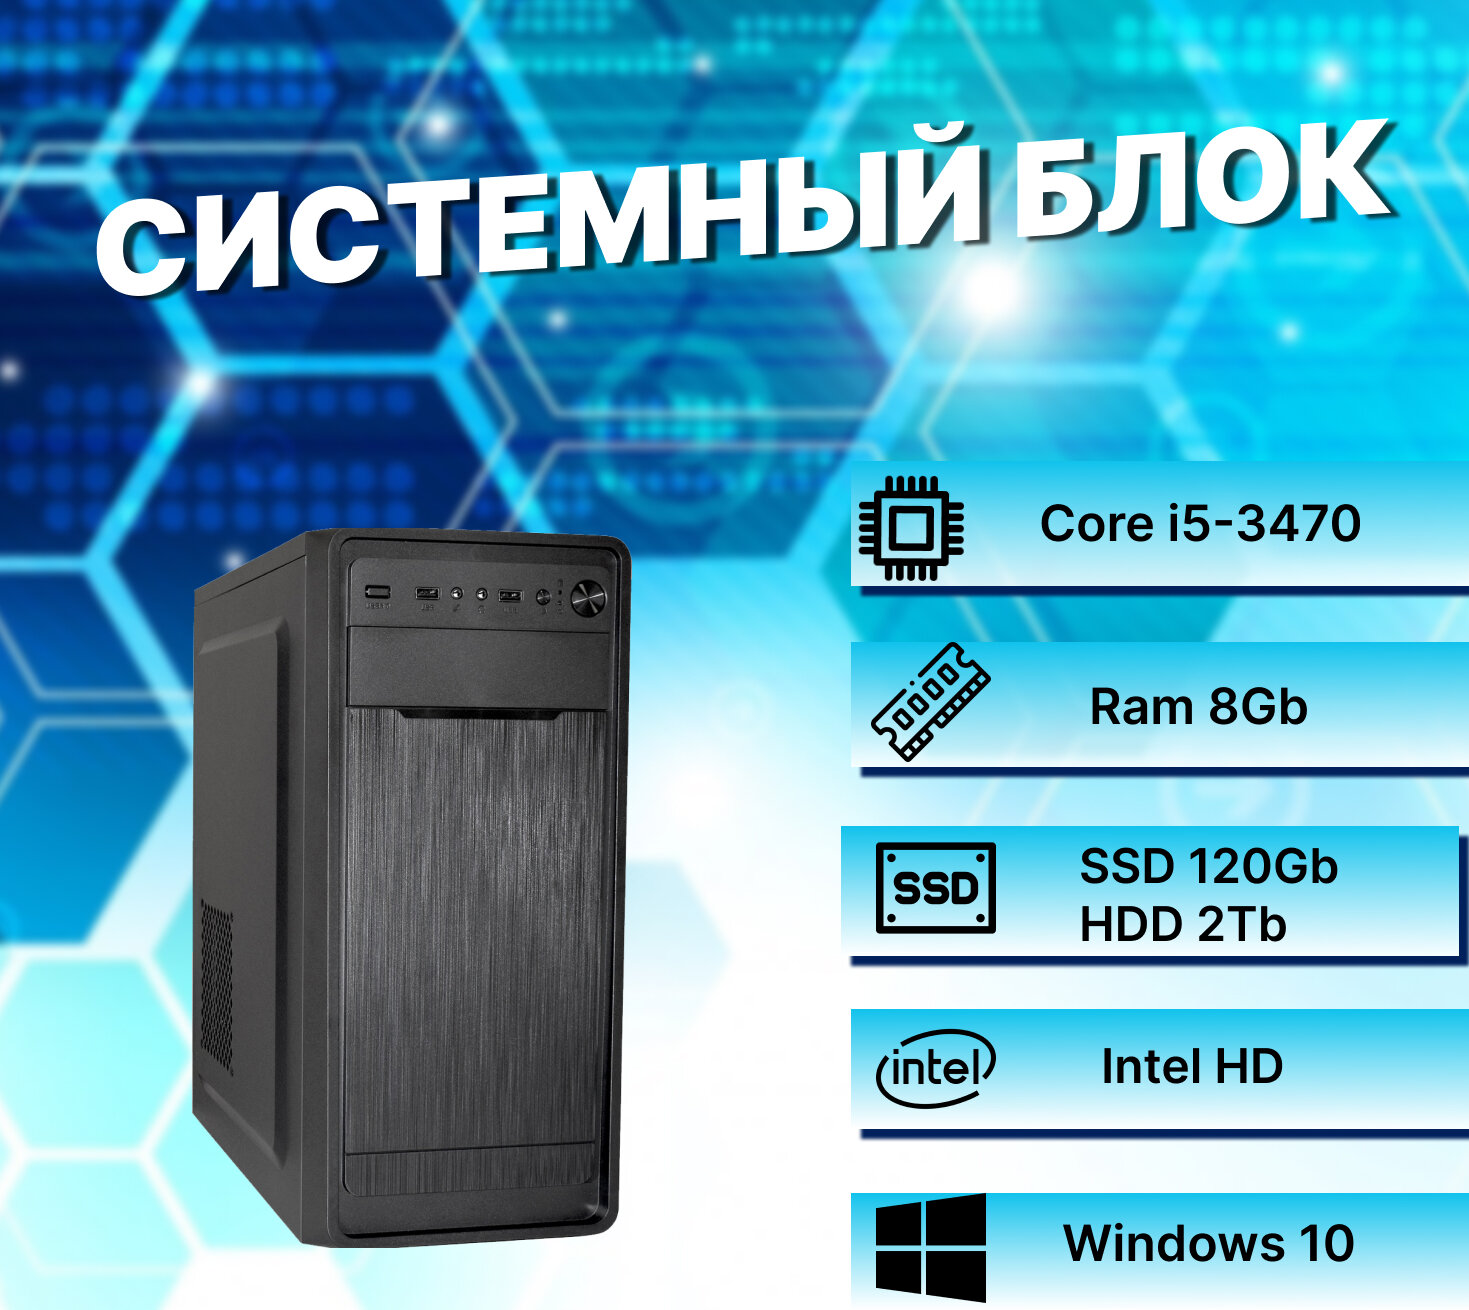 Системный блок Intel Core I5-3470 (3.2ГГц)/ RAM 8Gb/ SSD 120Gb/ HDD 2Tb/ Intel HD/ Windows 10 Pro